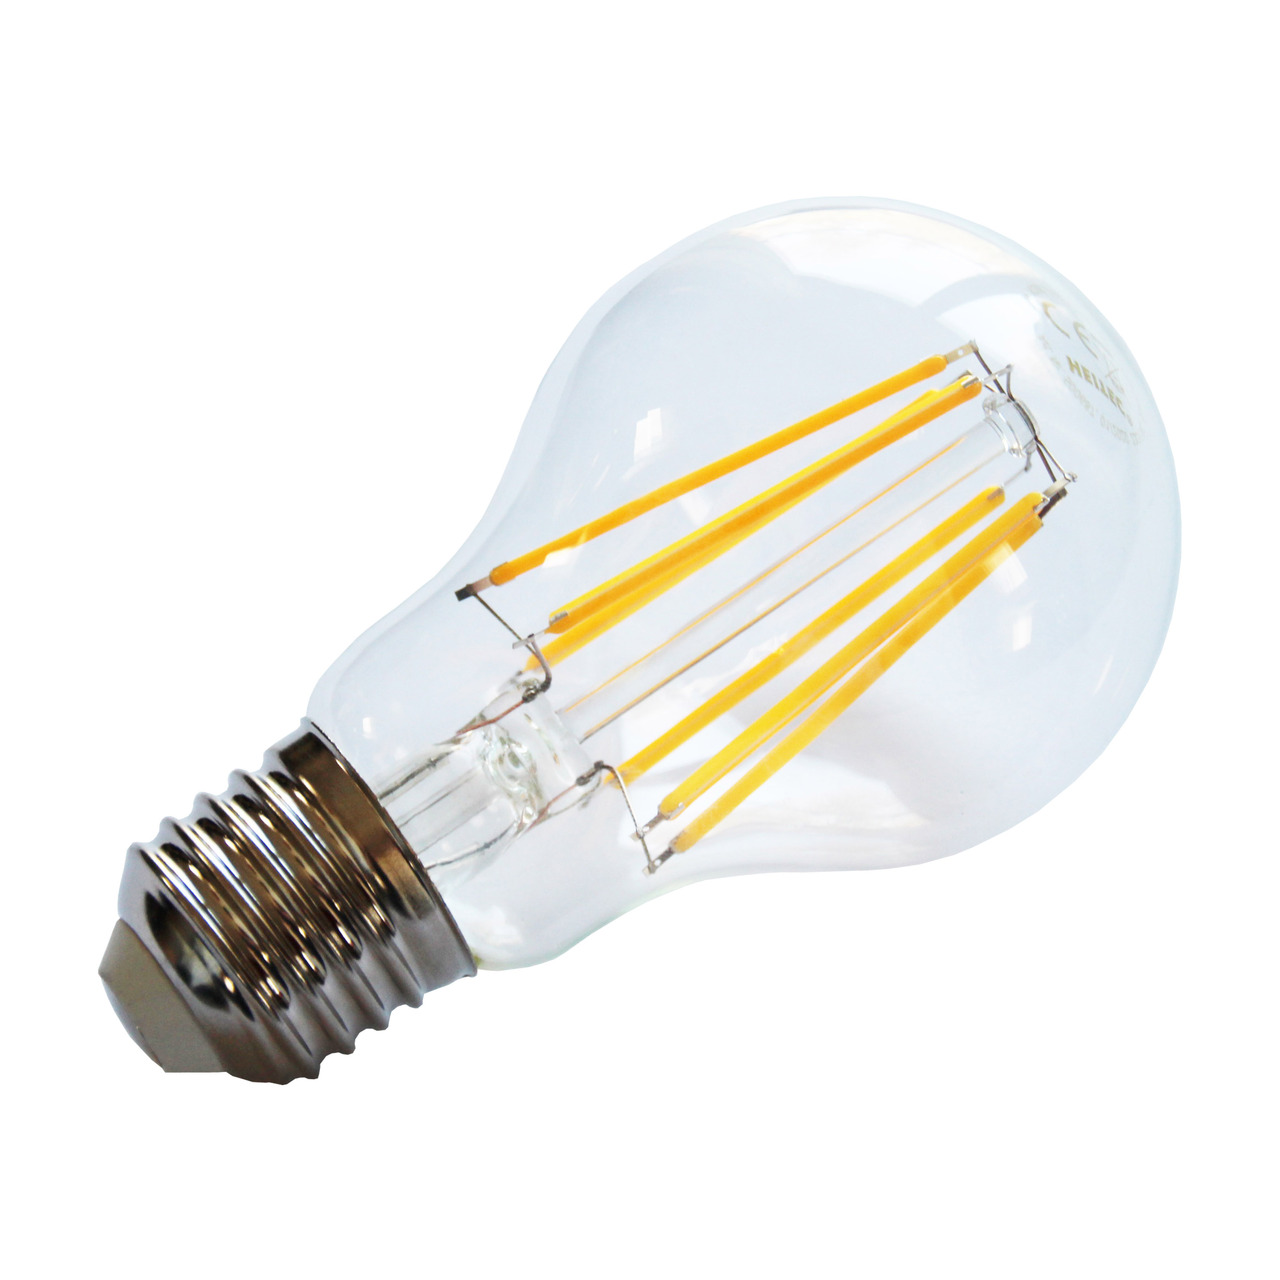 HEITEC 6-W-Filament-LED-Lampe A60- E27- 650 lm- warmweiss- klar unter Beleuchtung